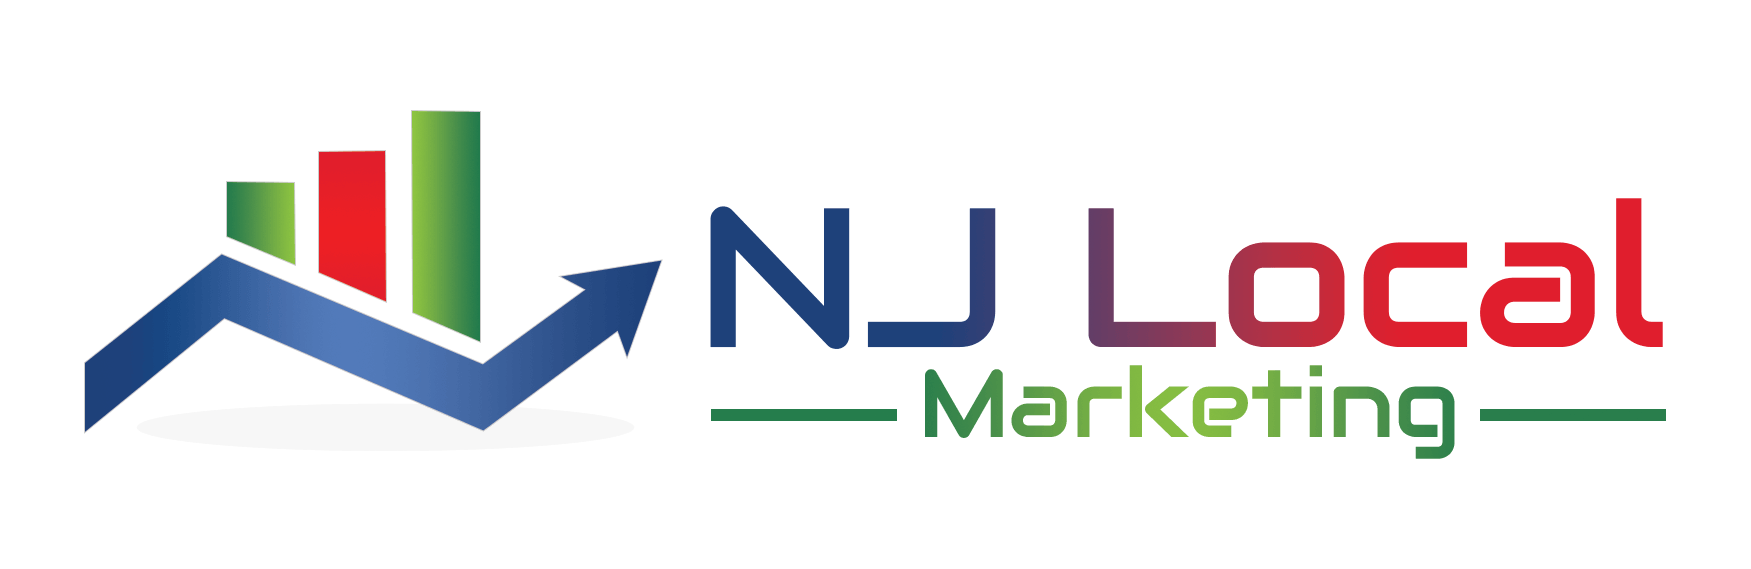 NJ Local Marketing Logo